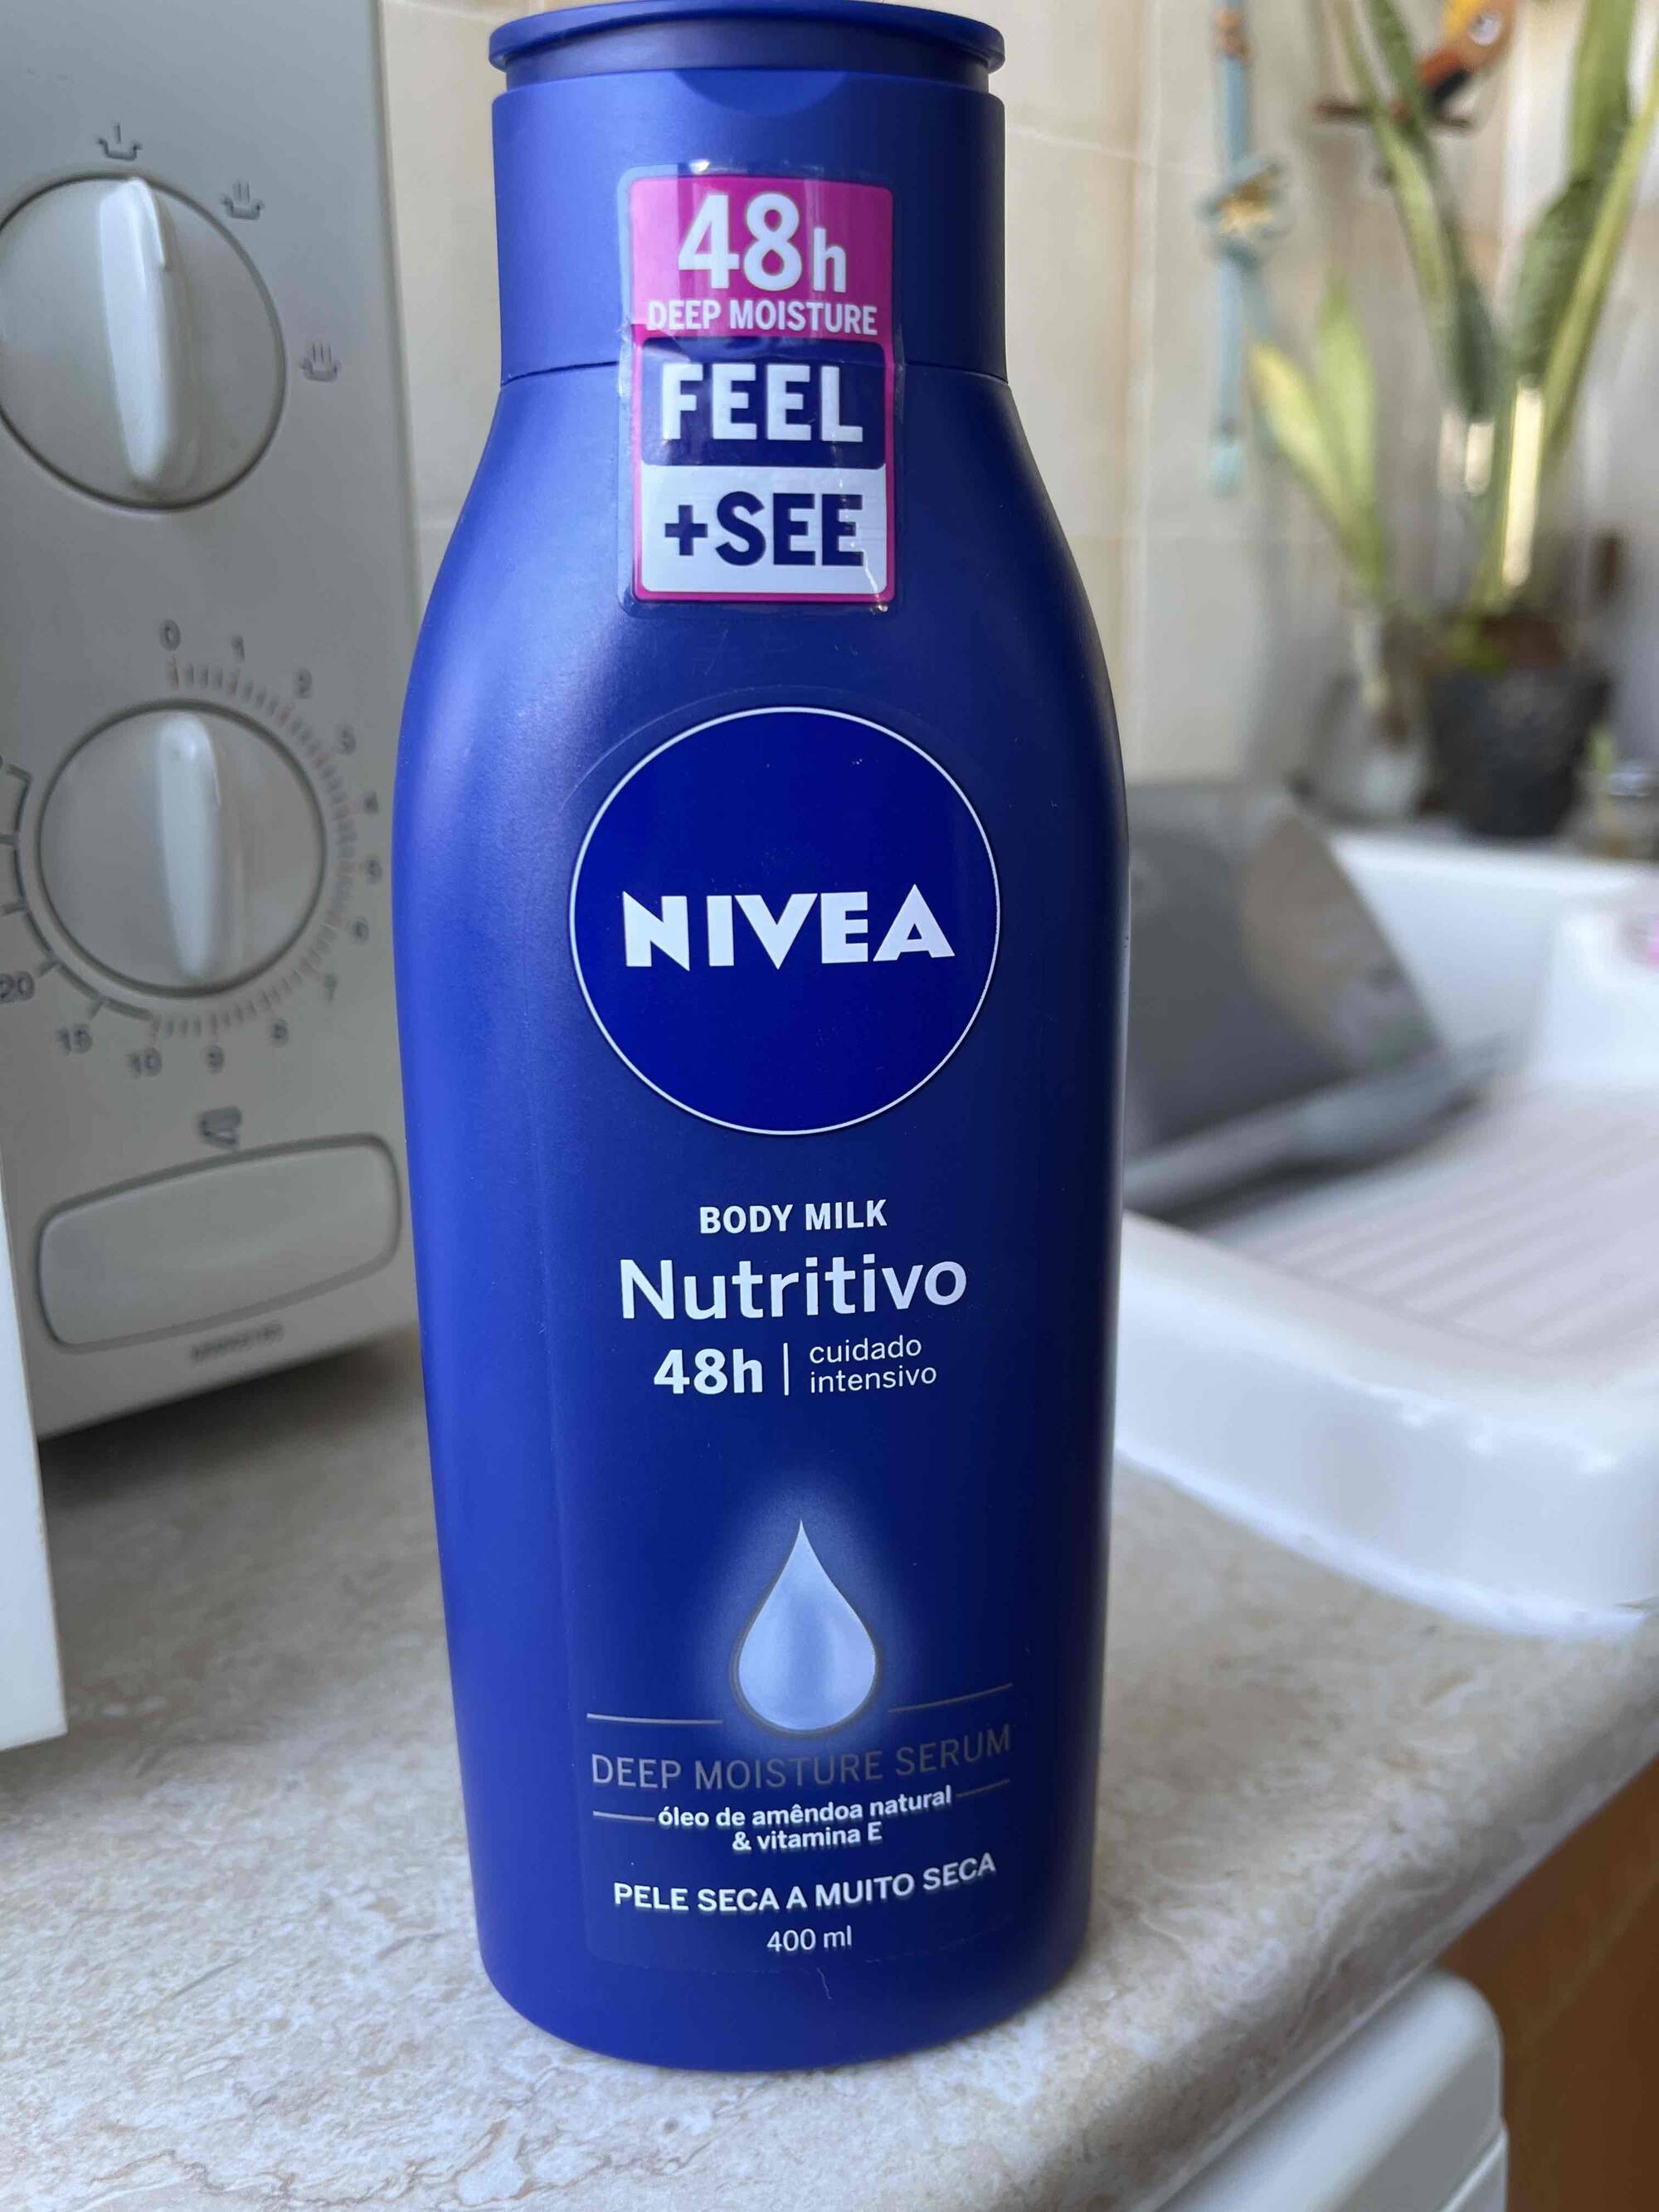 NIVEA - Body milk nutritivo 48h